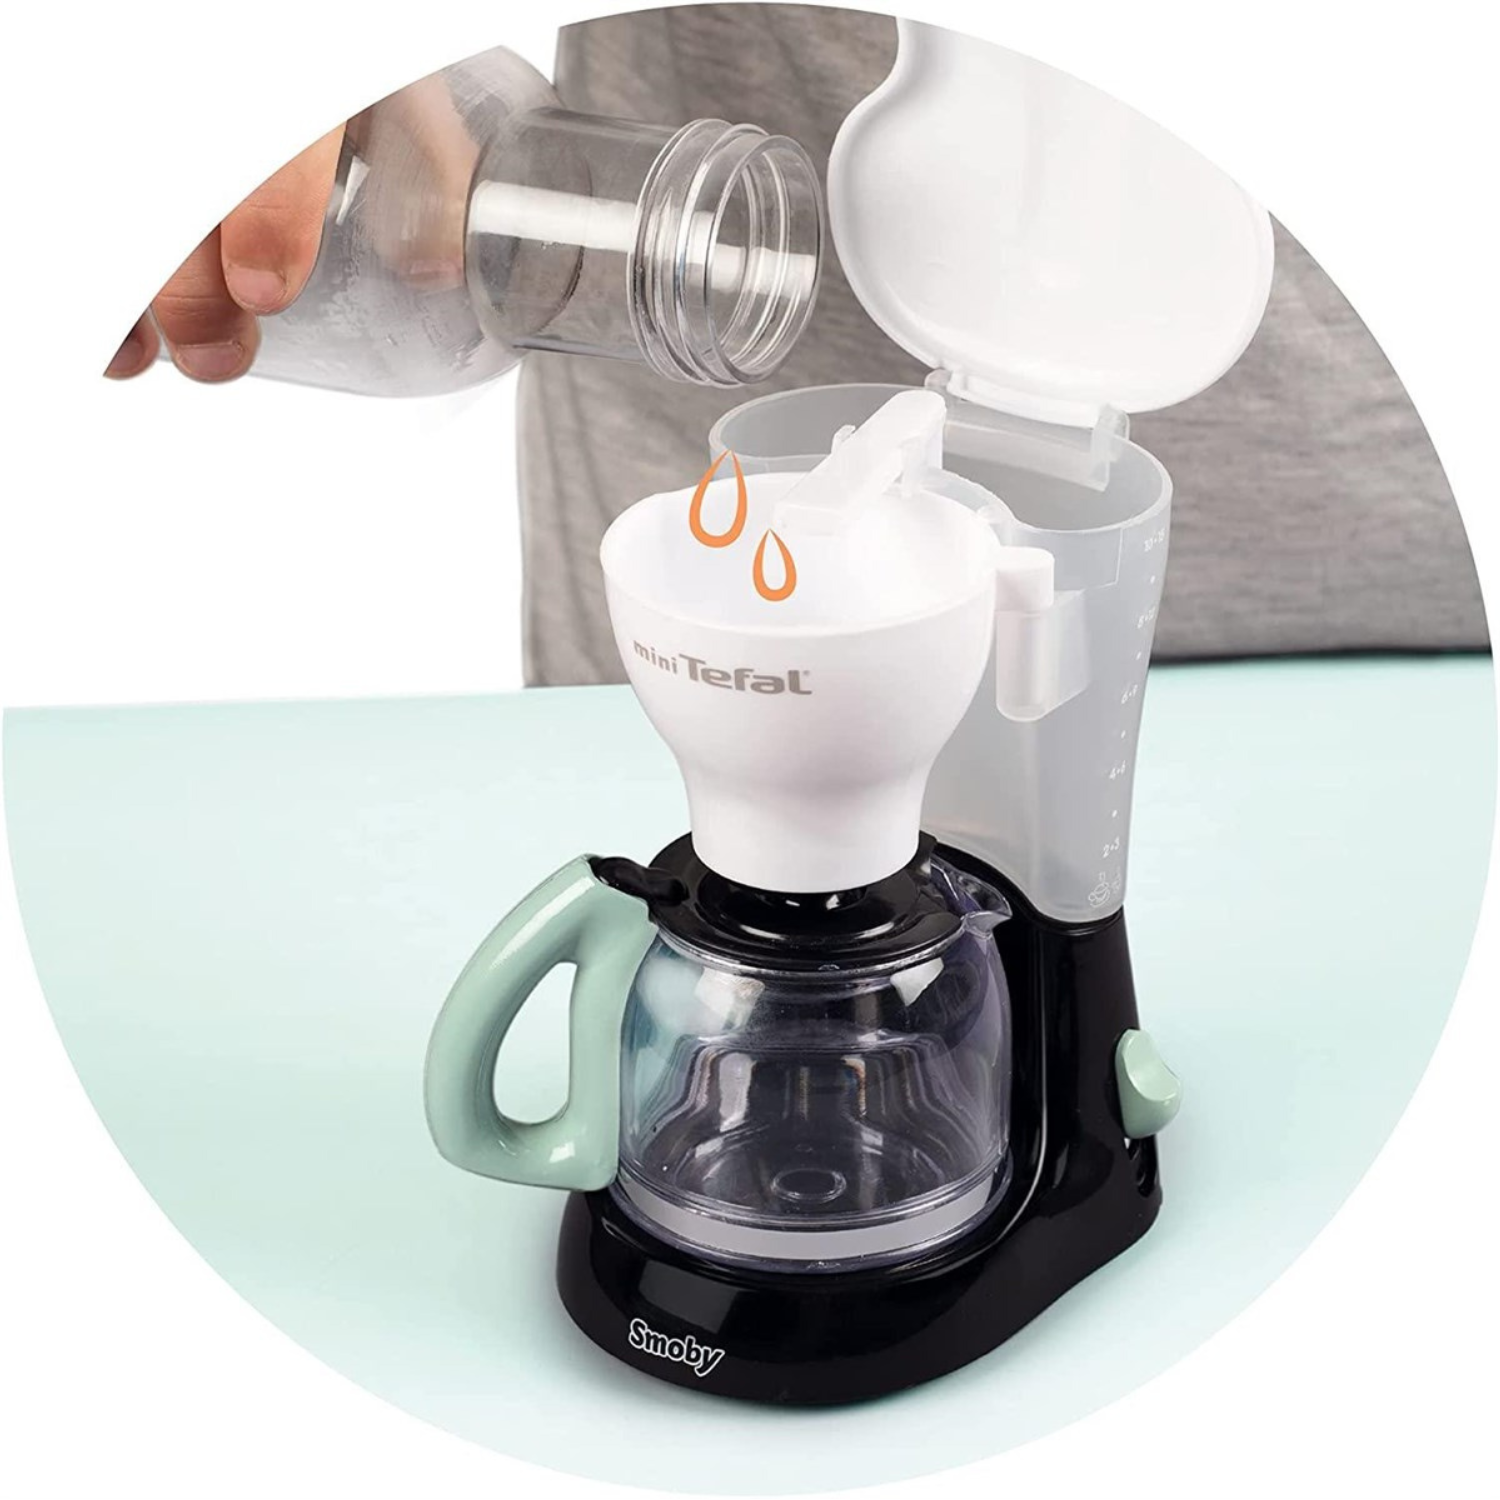 Smoby Tefal Oyuncak Filtre Kahve Makinesi - Siyah 310544 | Toysall